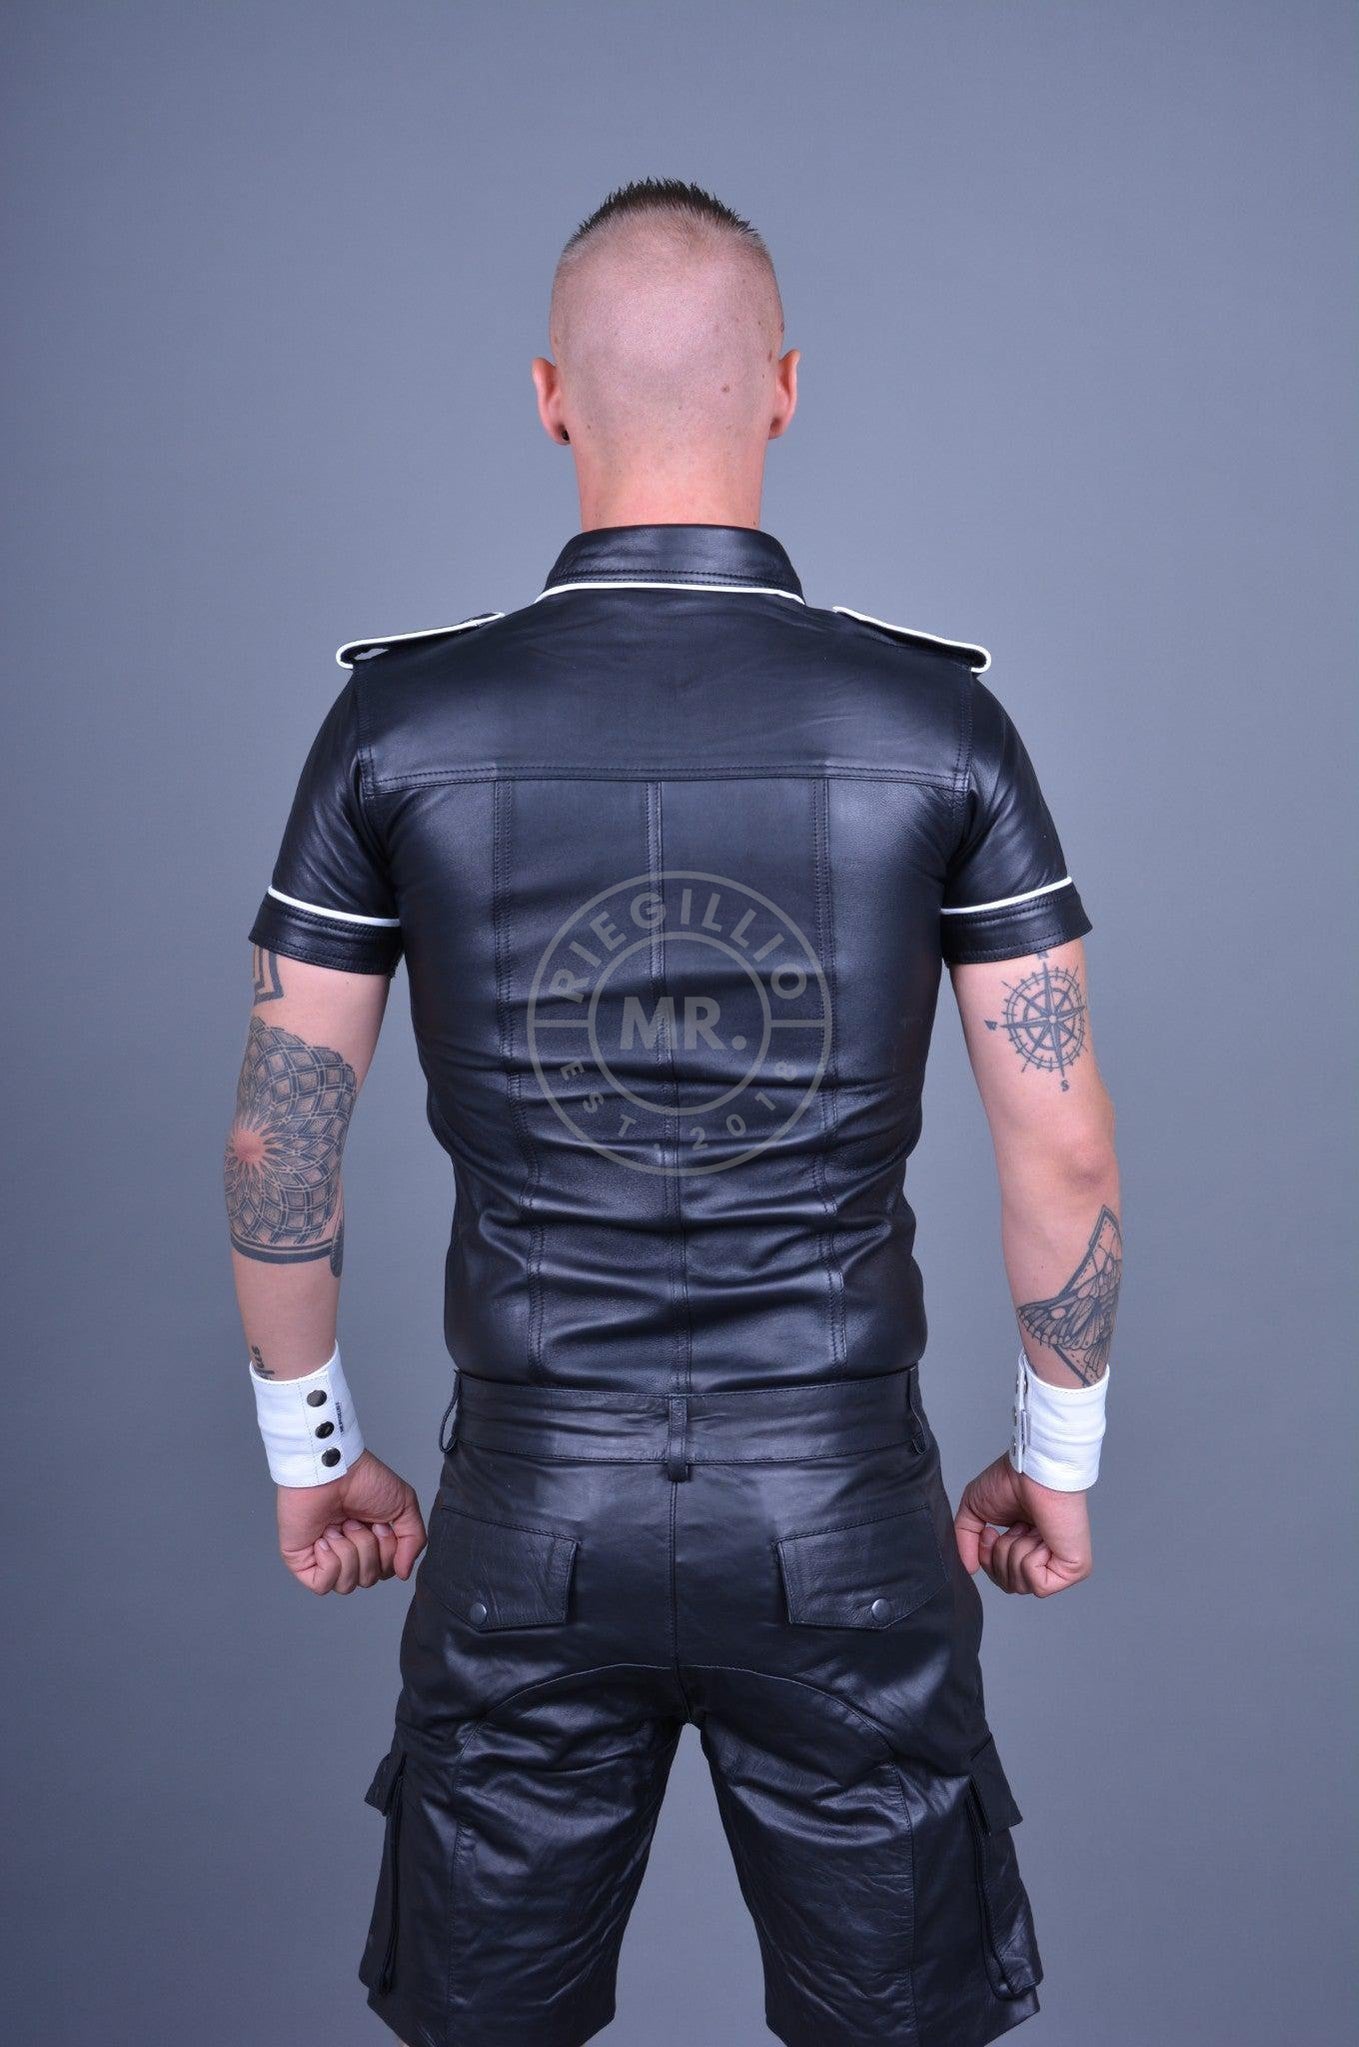 Black Leather Shirt - WHITE Piping at MR. Riegillio